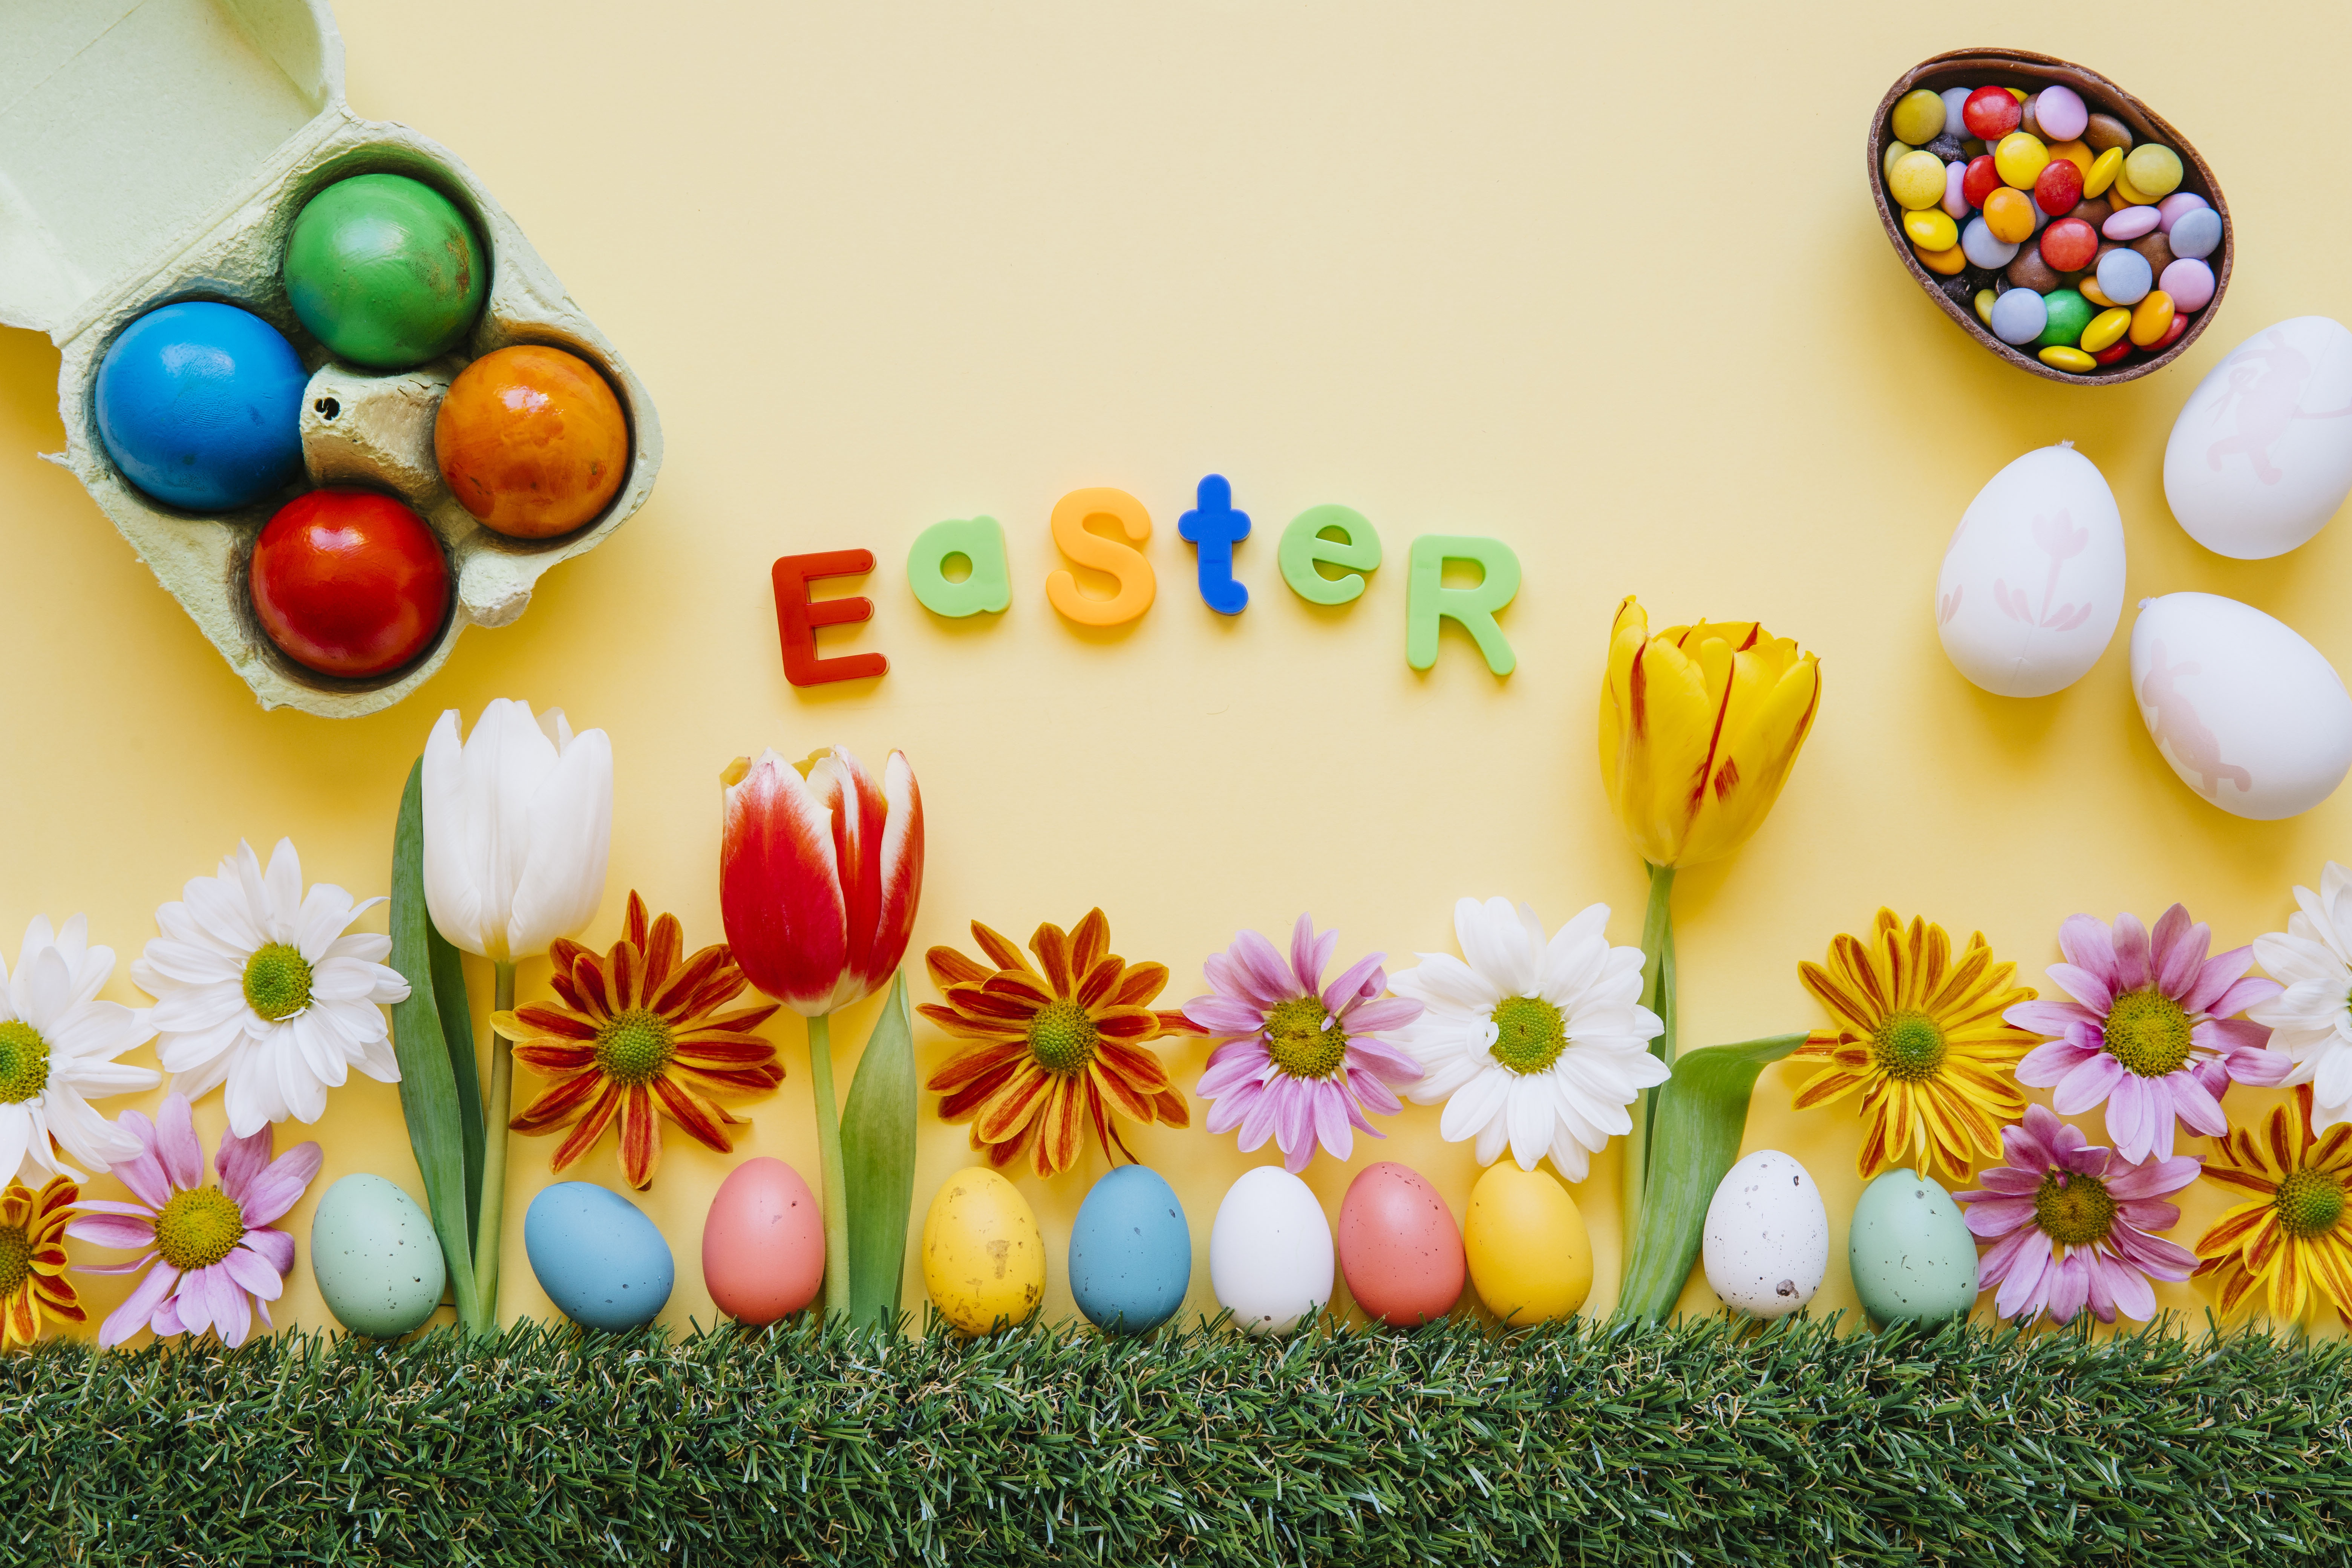 Descarga gratis la imagen Pascua, Flor, Día Festivo, Colores, Tulipán, Caramelo, Bodegón, Huevo De Pascua en el escritorio de tu PC